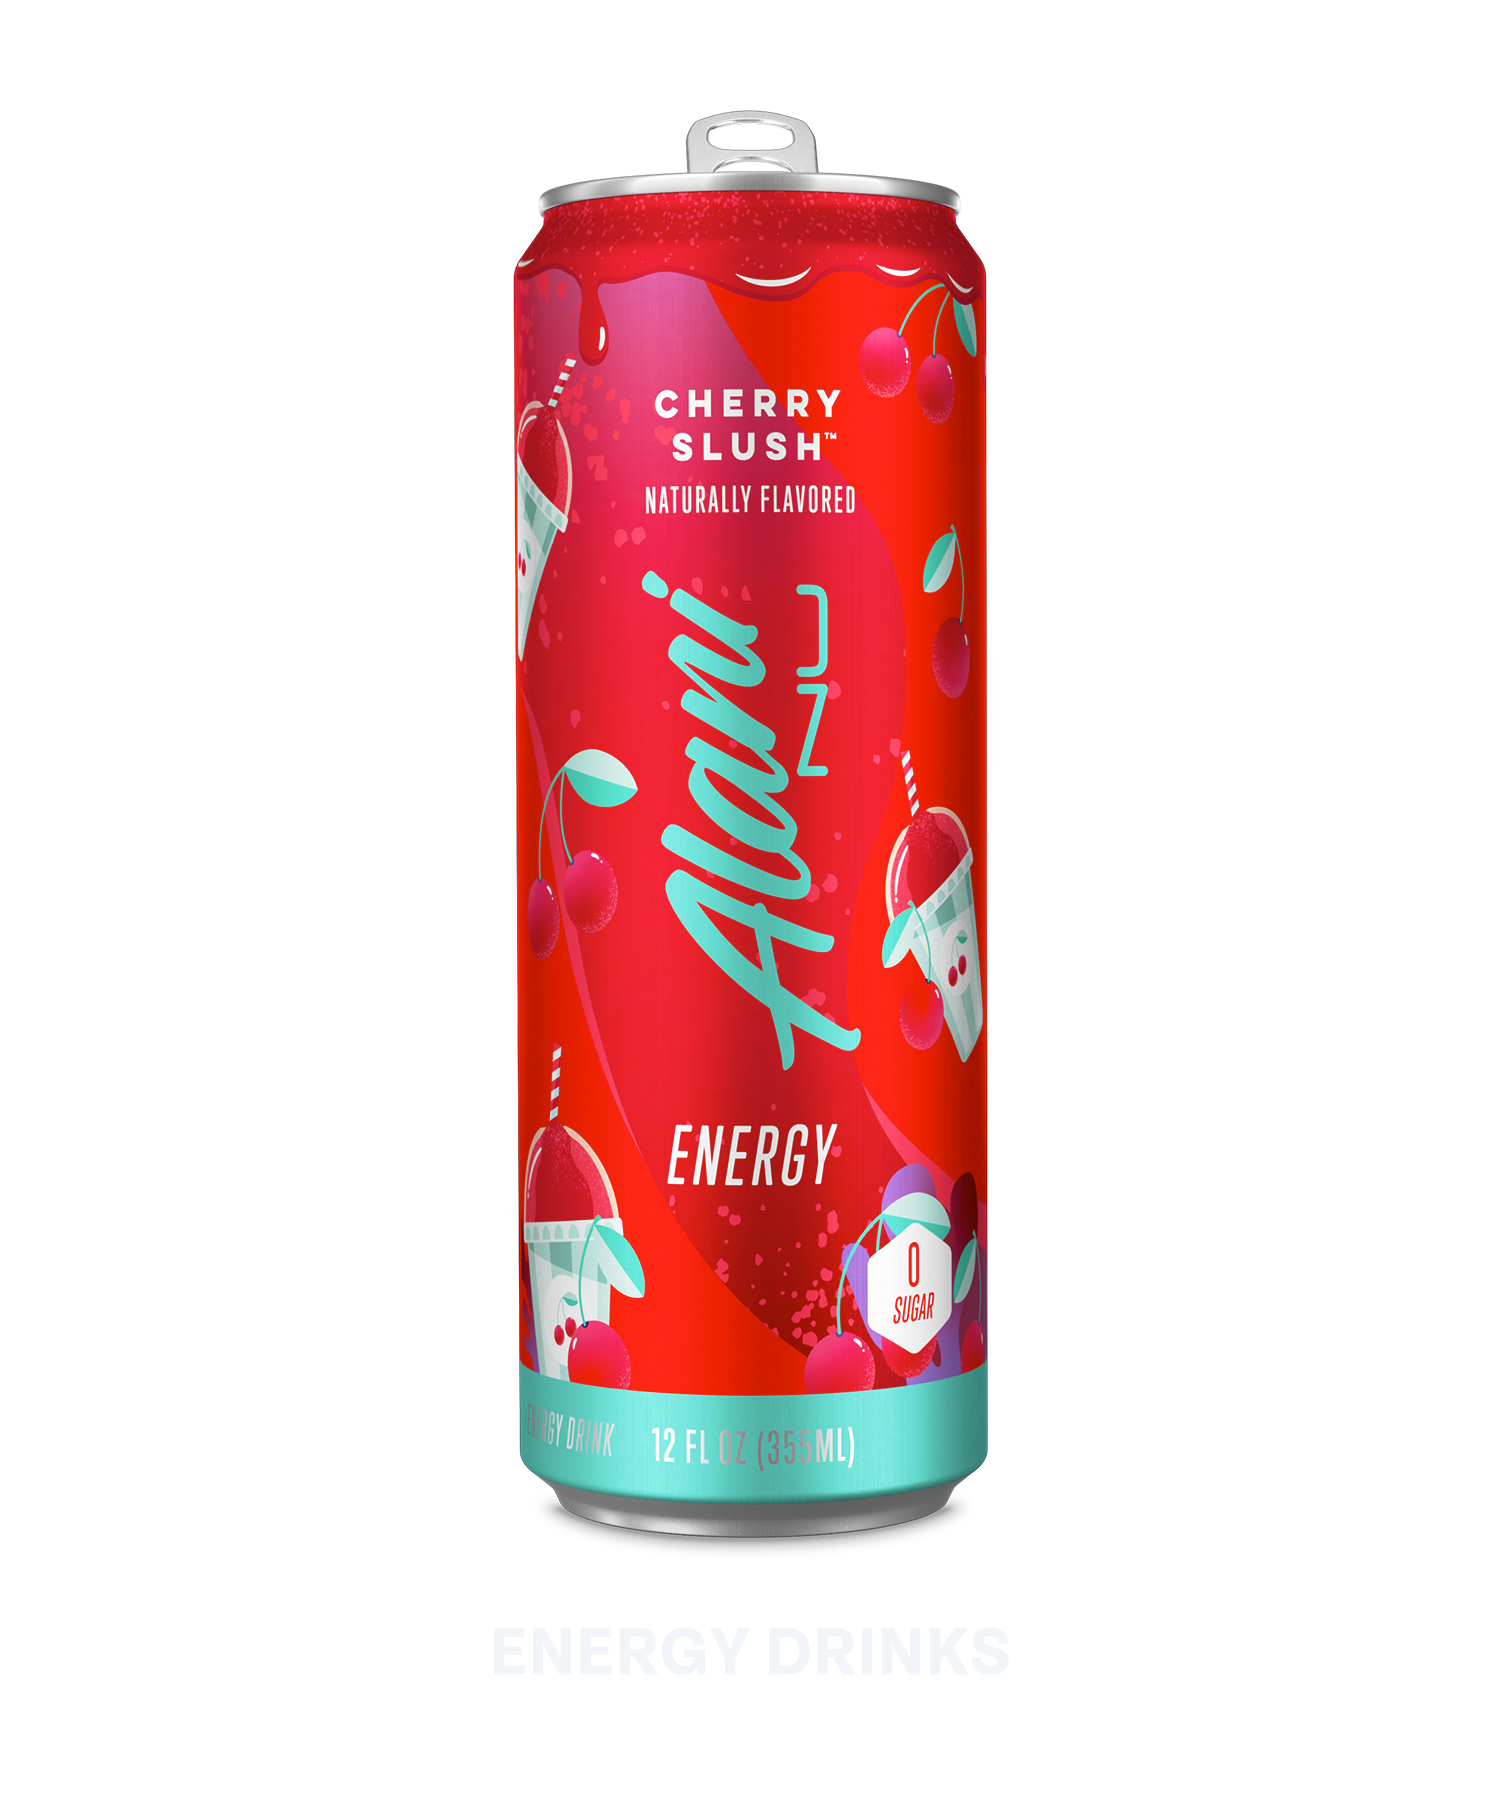 A energy drink in flavor cherry slush.